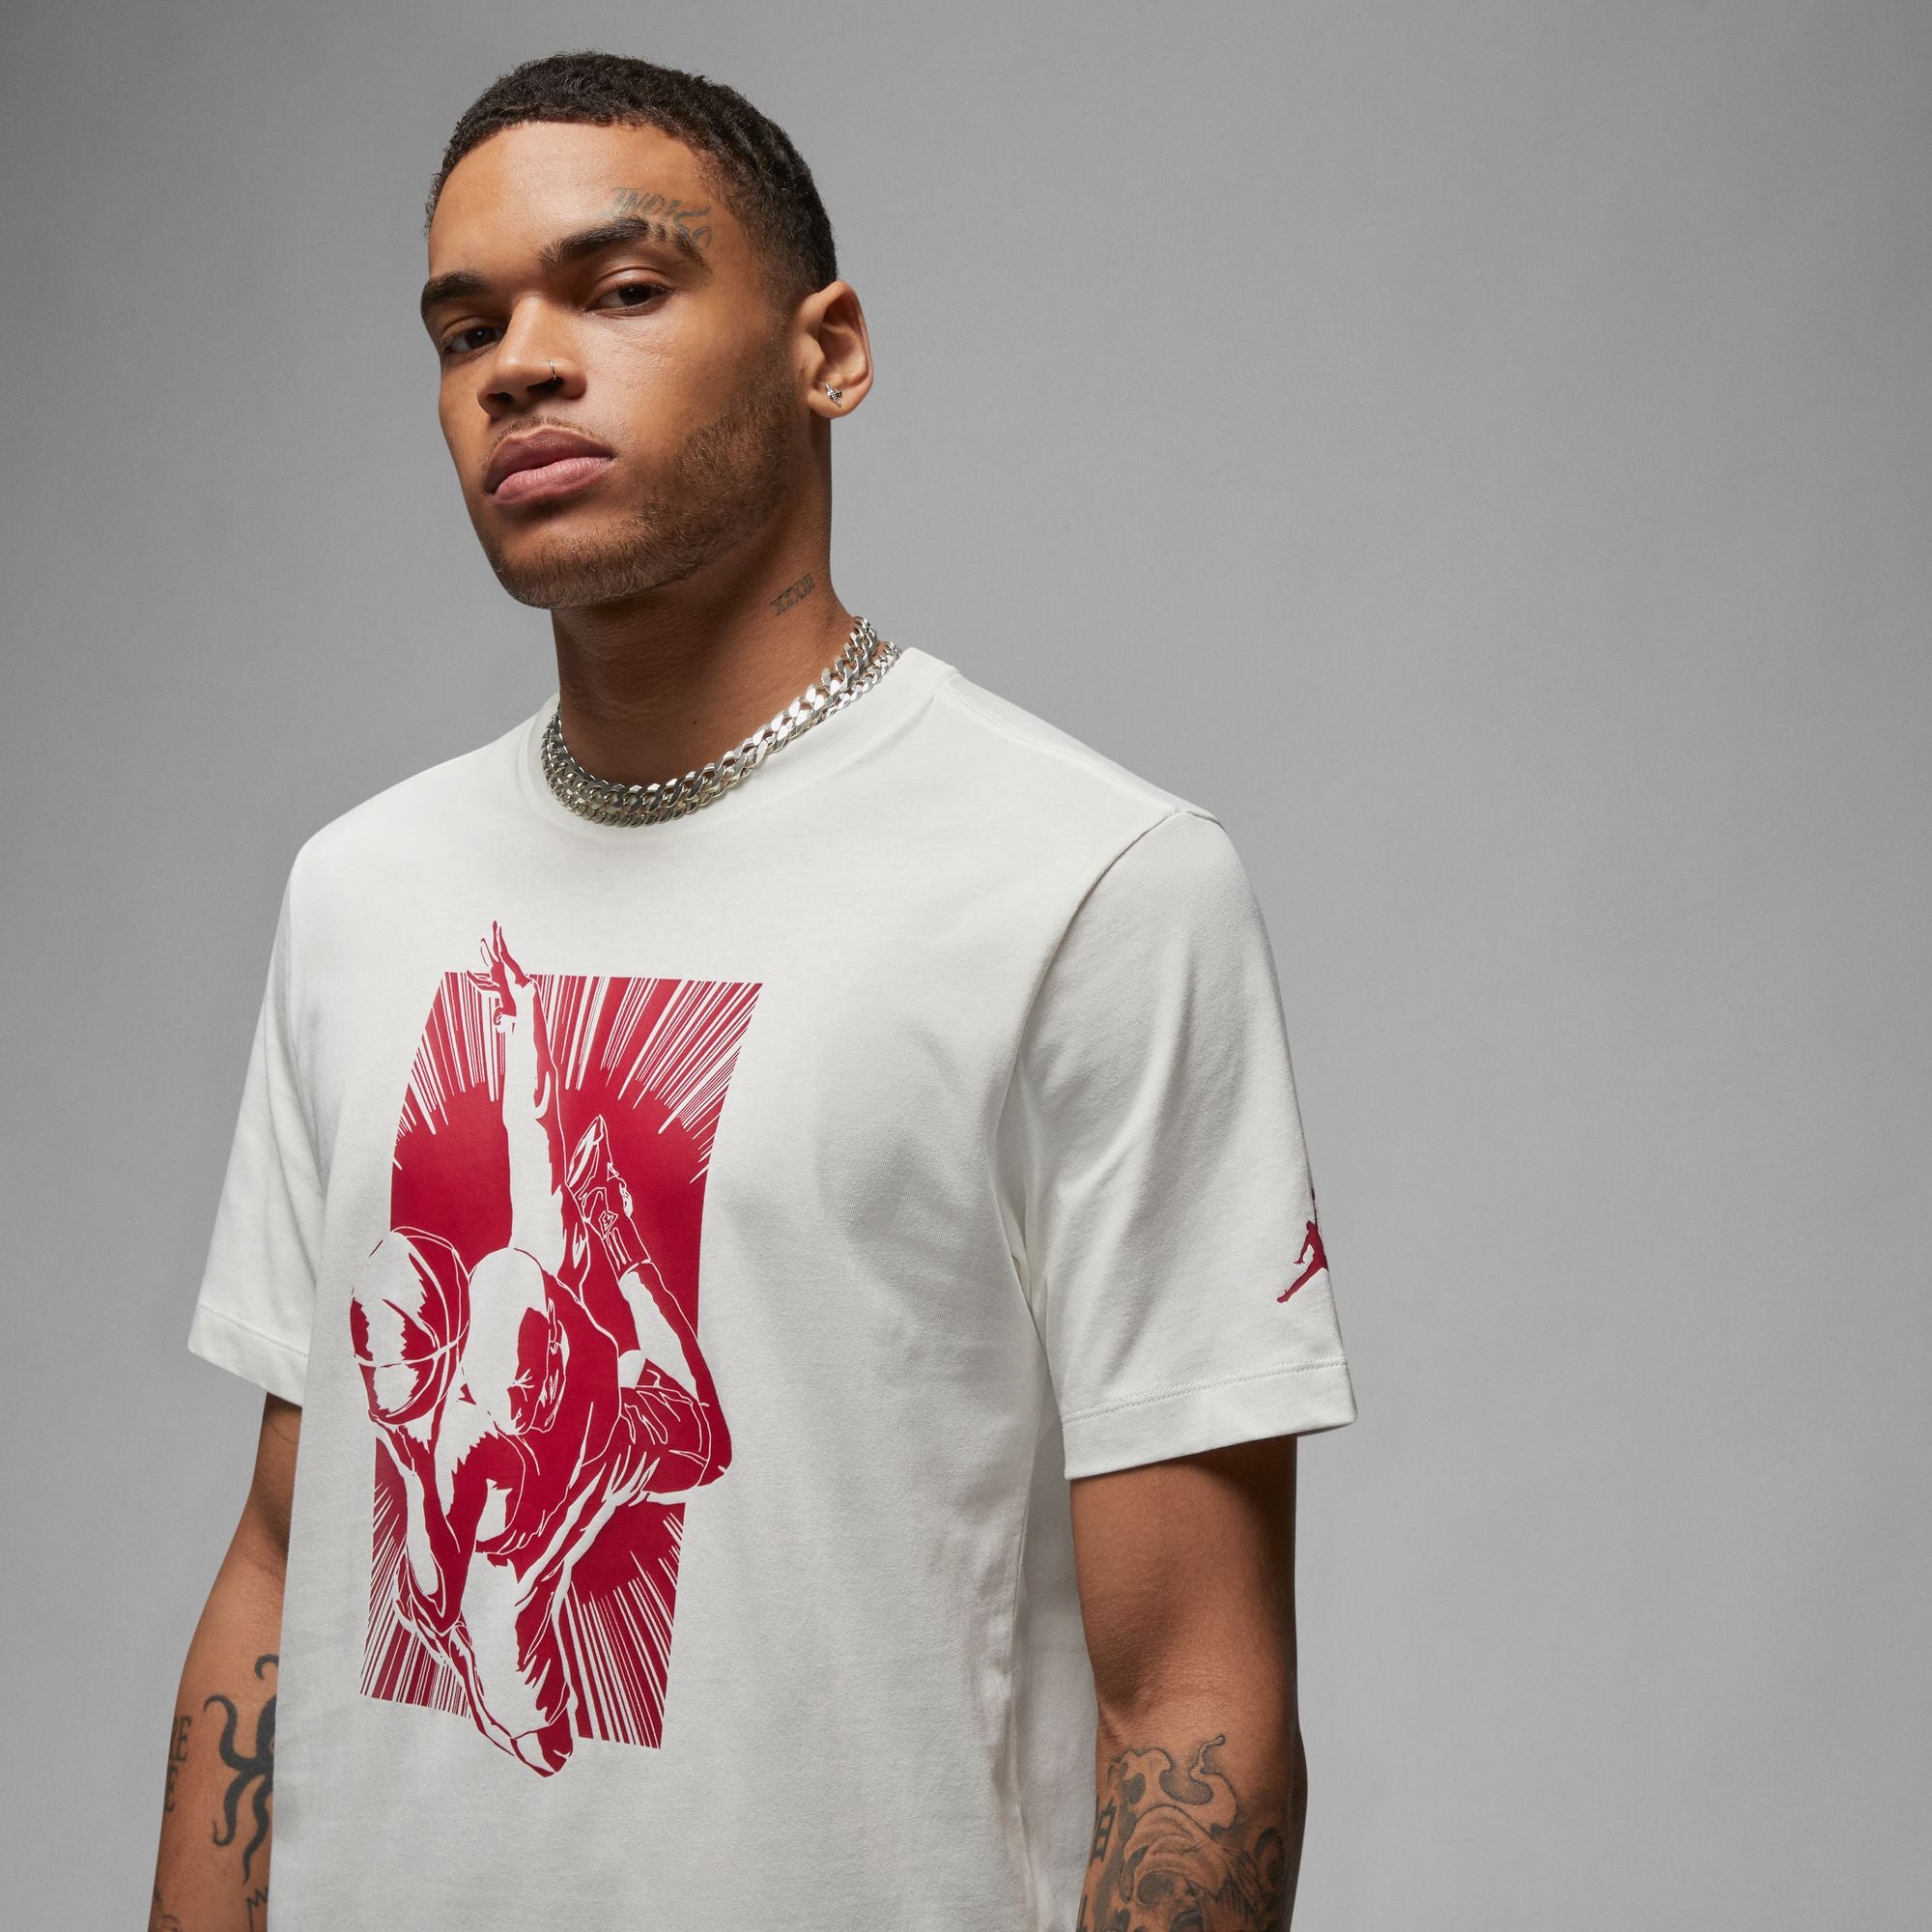 Nike Air Jordan Flight White/Black/Red Men's Basketball T Shirt Size XL 